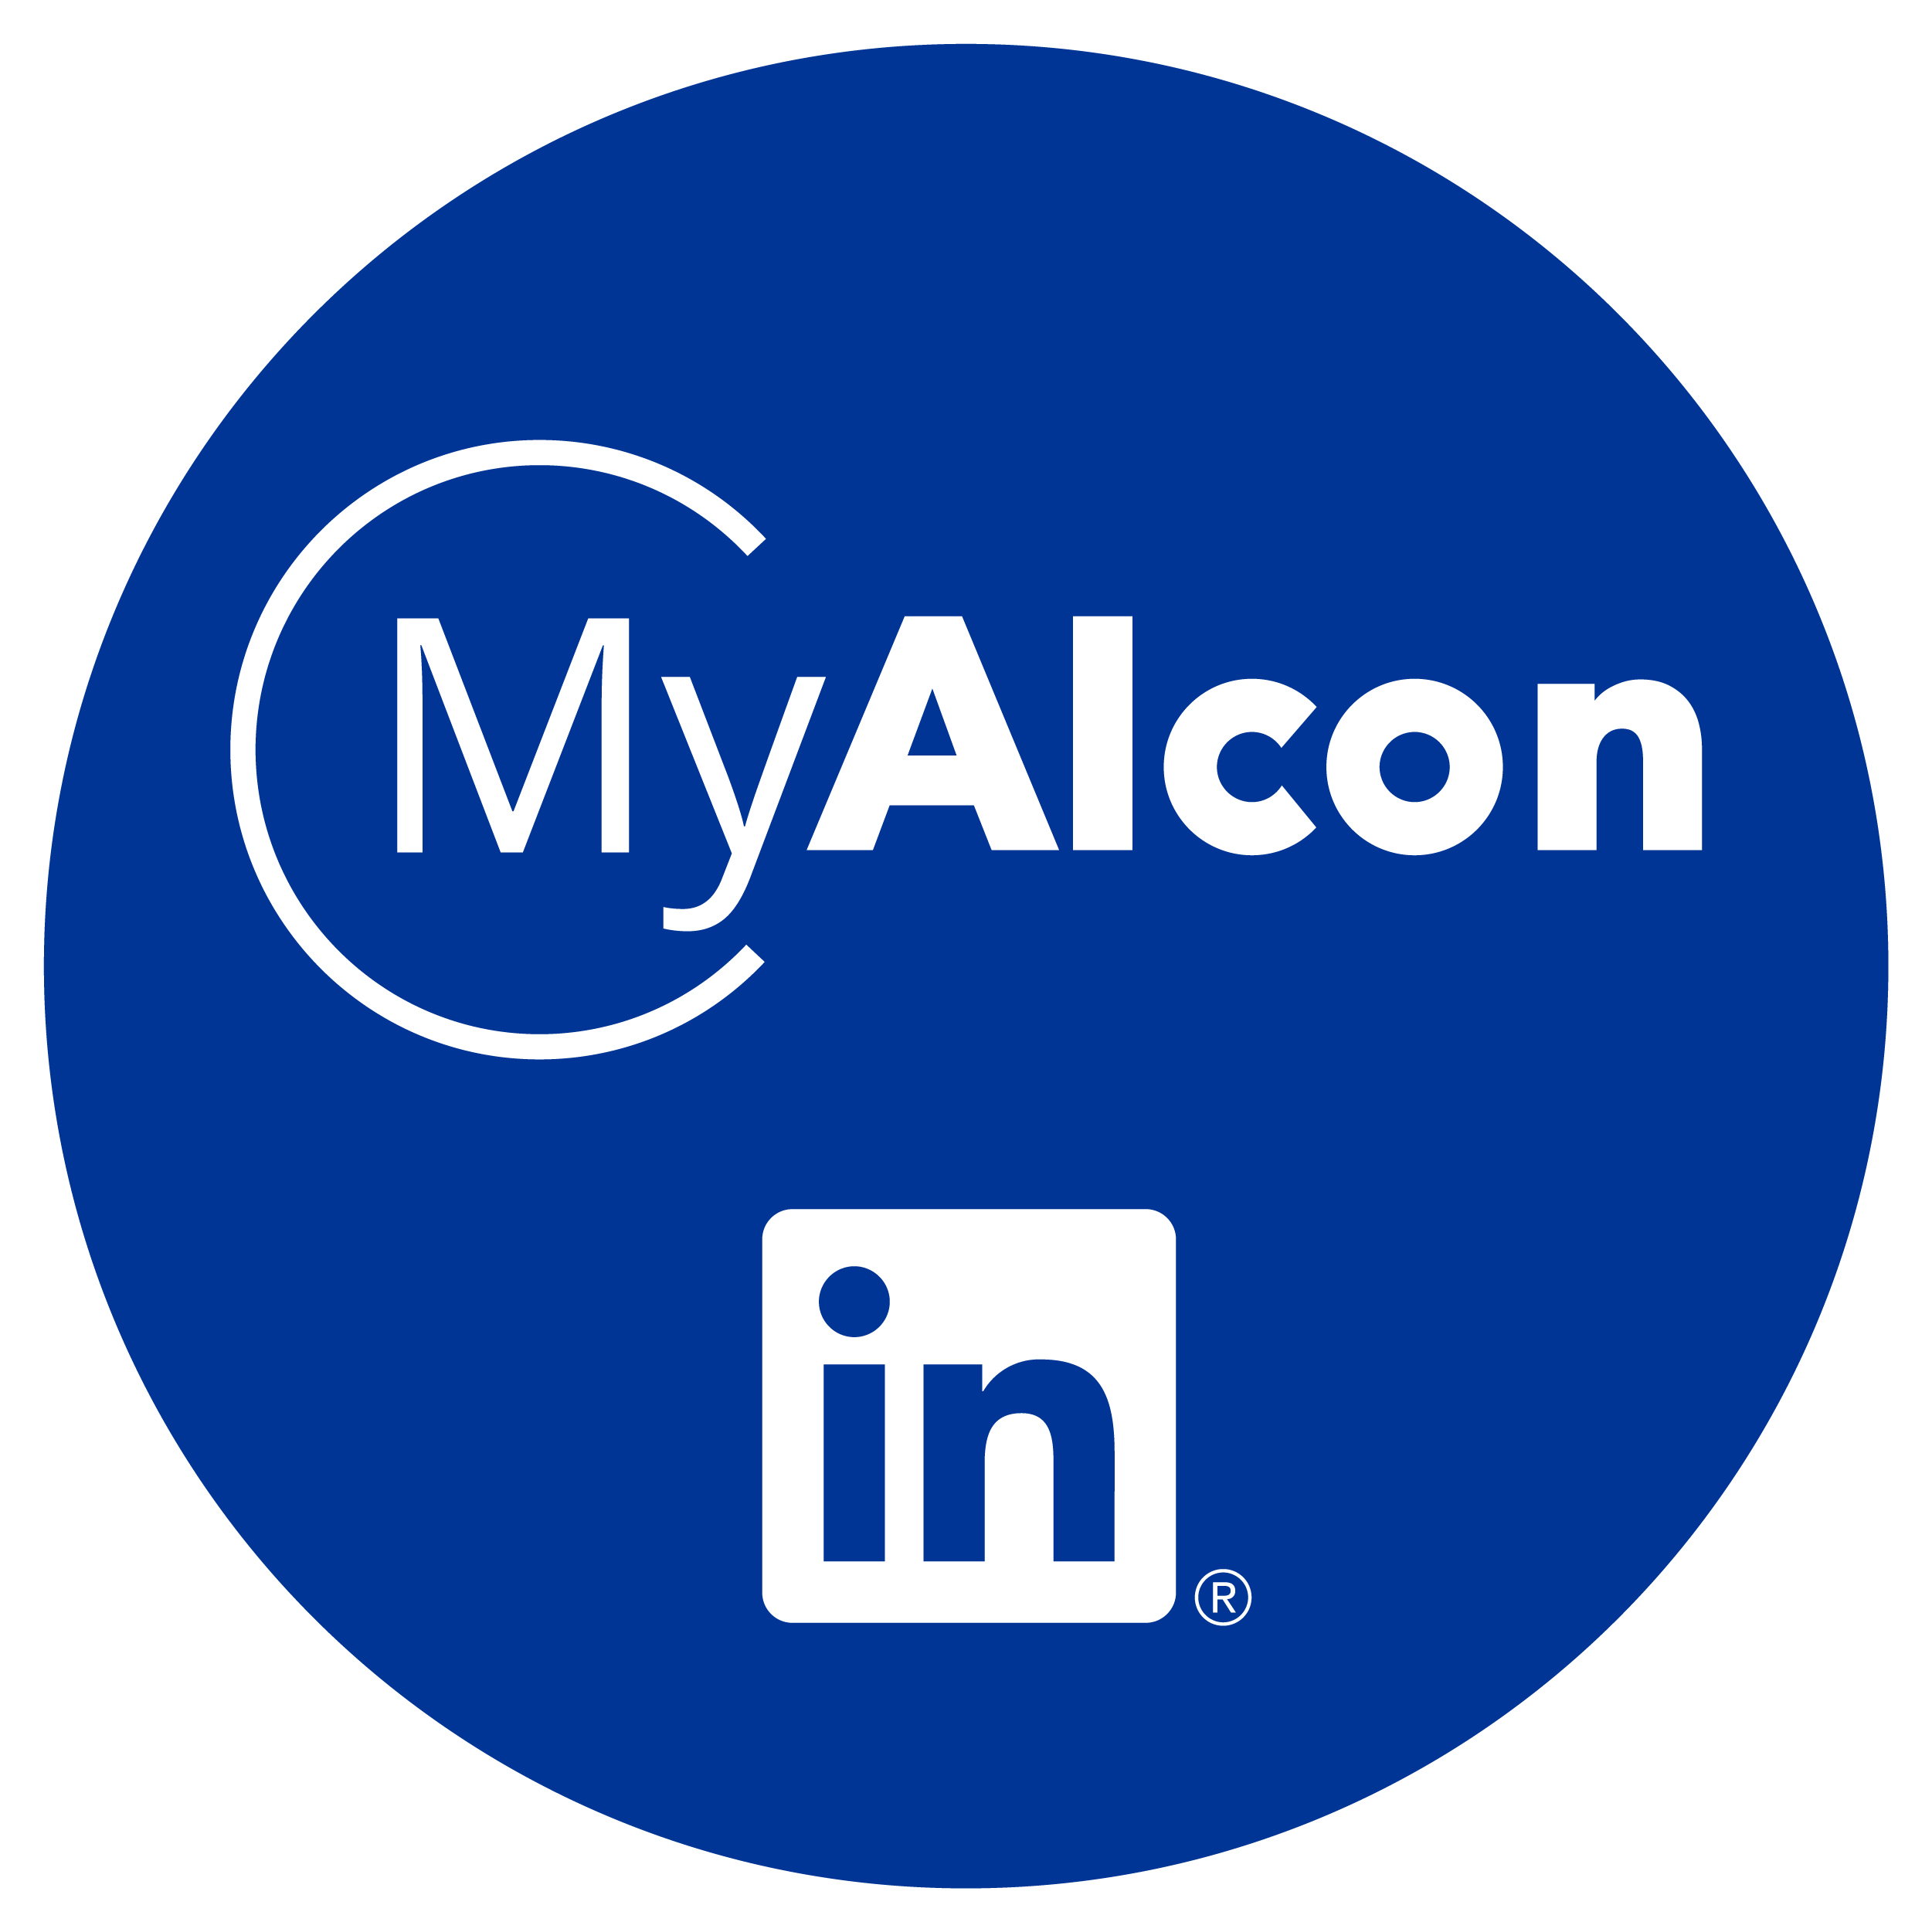 MyAlcon Professionals Linkin